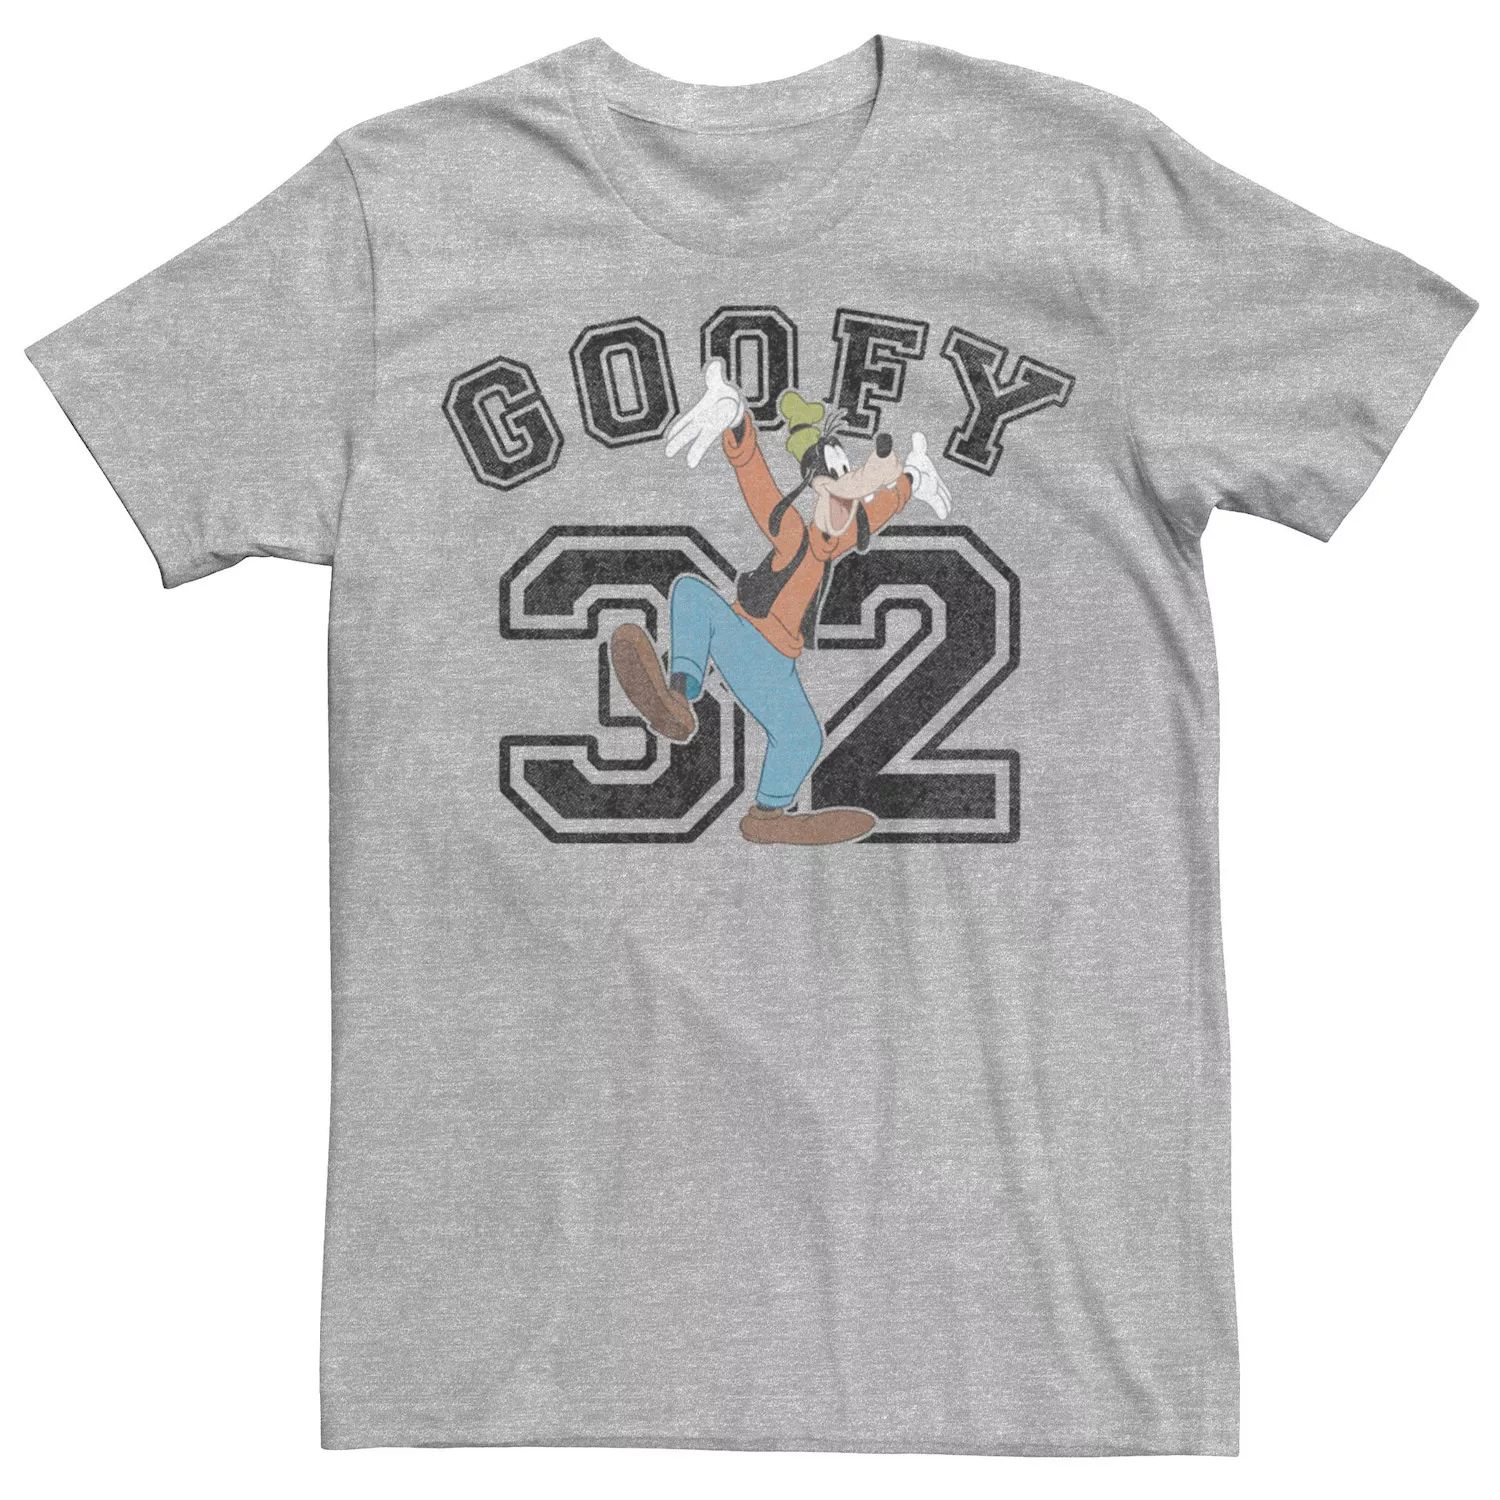 Мужская футболка Disney Goofy Varsity Text #32 с портретом Licensed Character